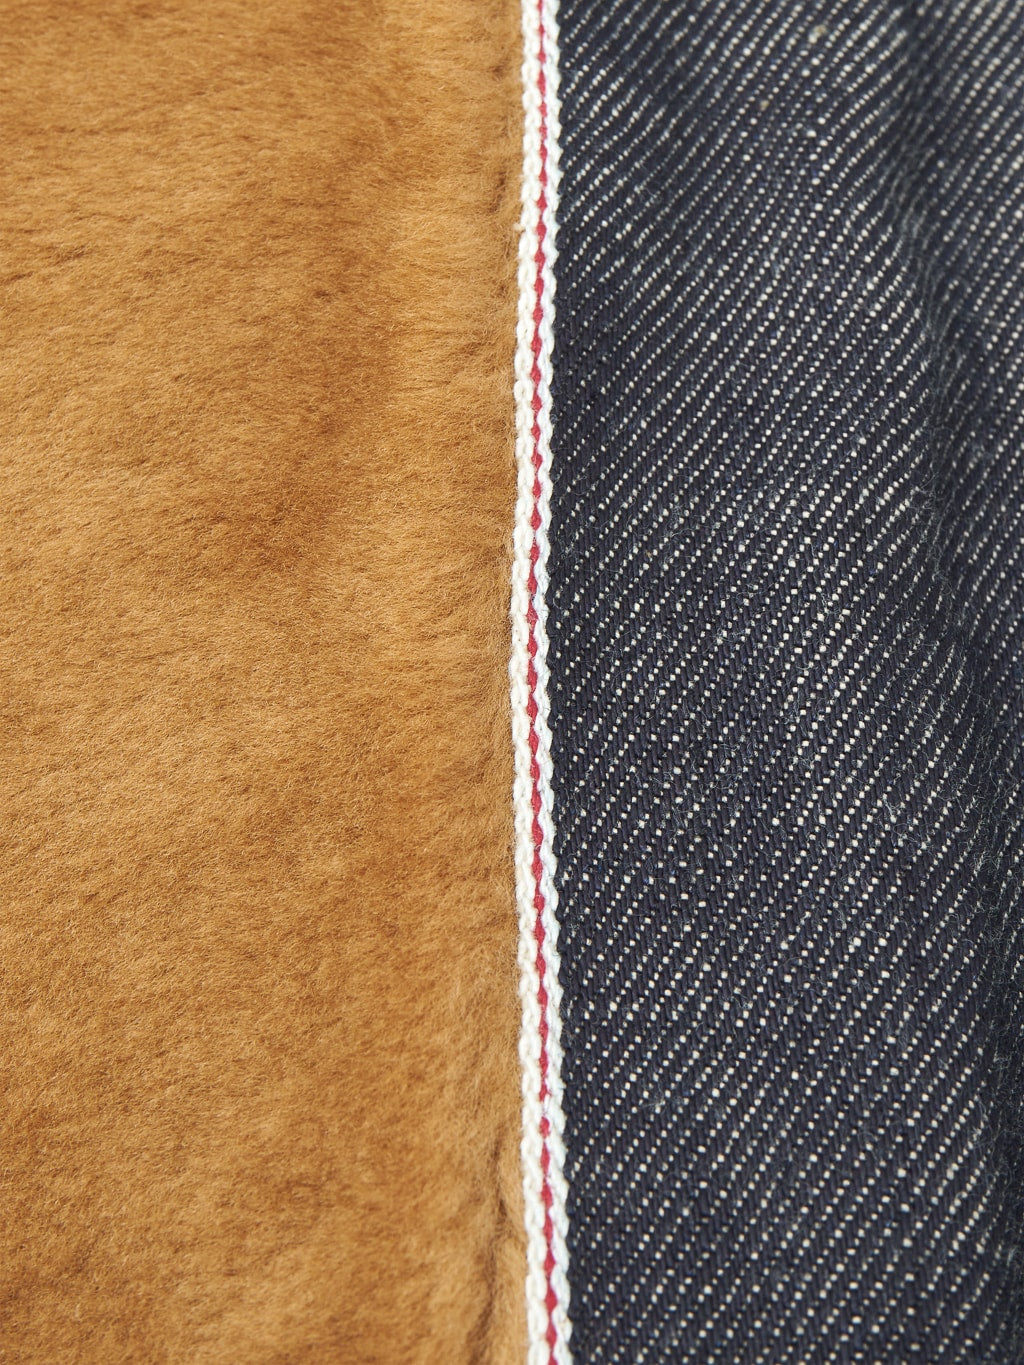 Freenote cloth denim shearling jacket selvedge line detail